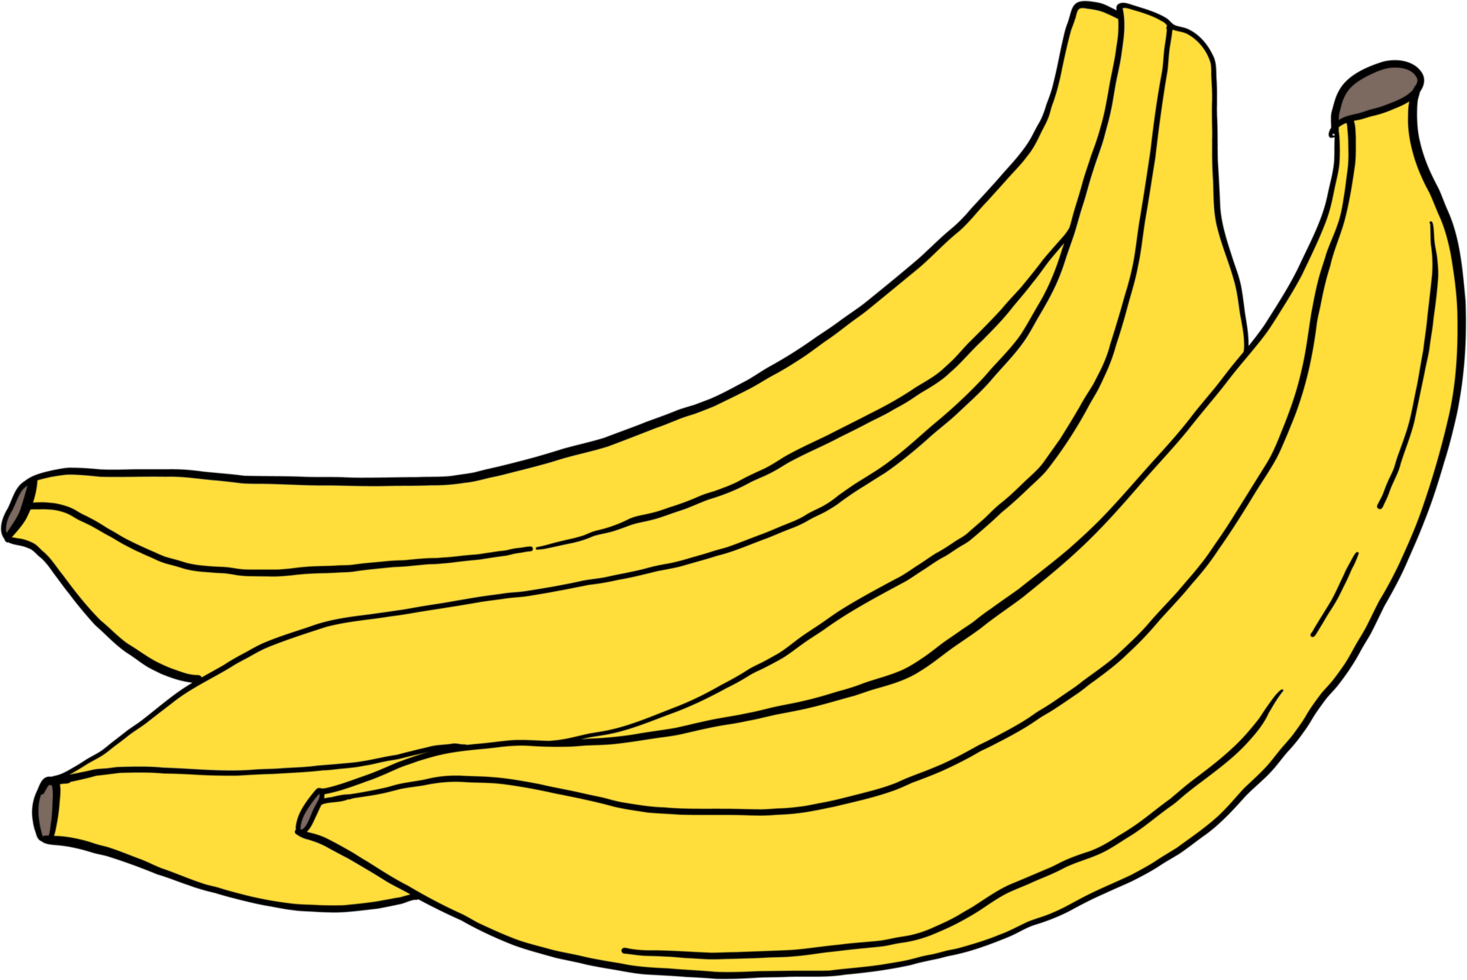 oodle dibujo a mano alzada de fruta de plátano. png